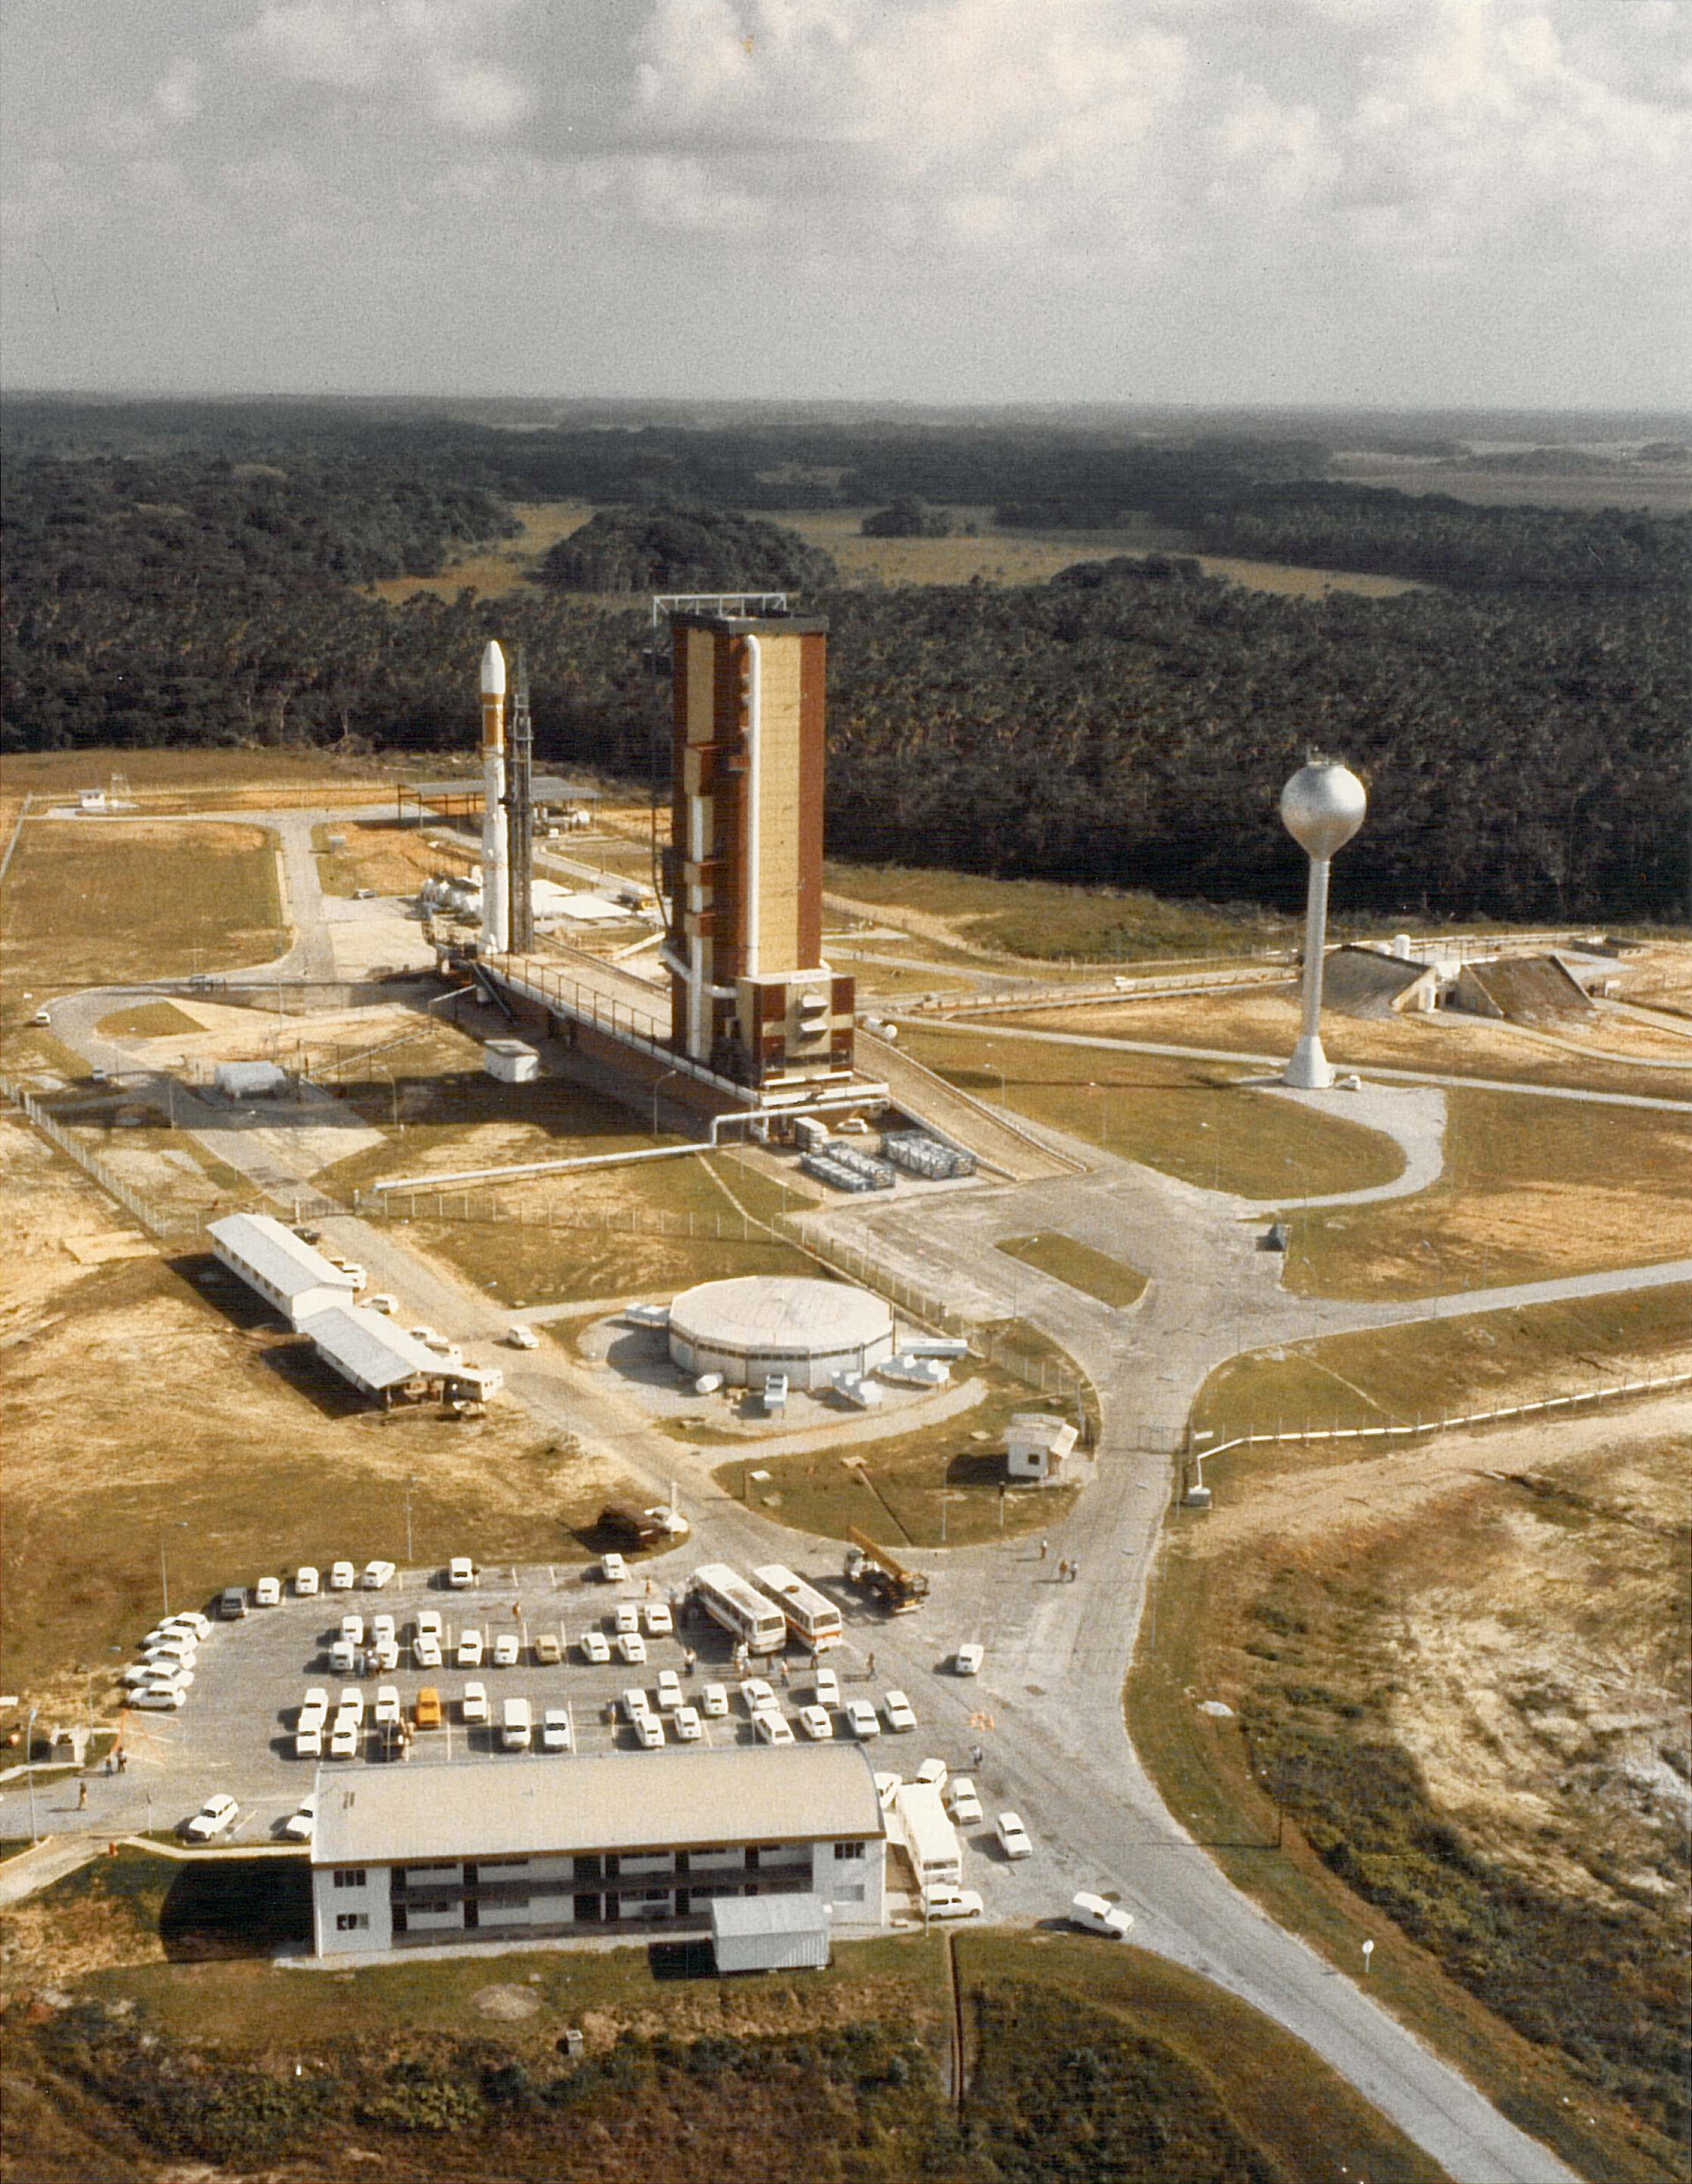 ESA 's Spaceport at Kourou, French Guiana, 1979